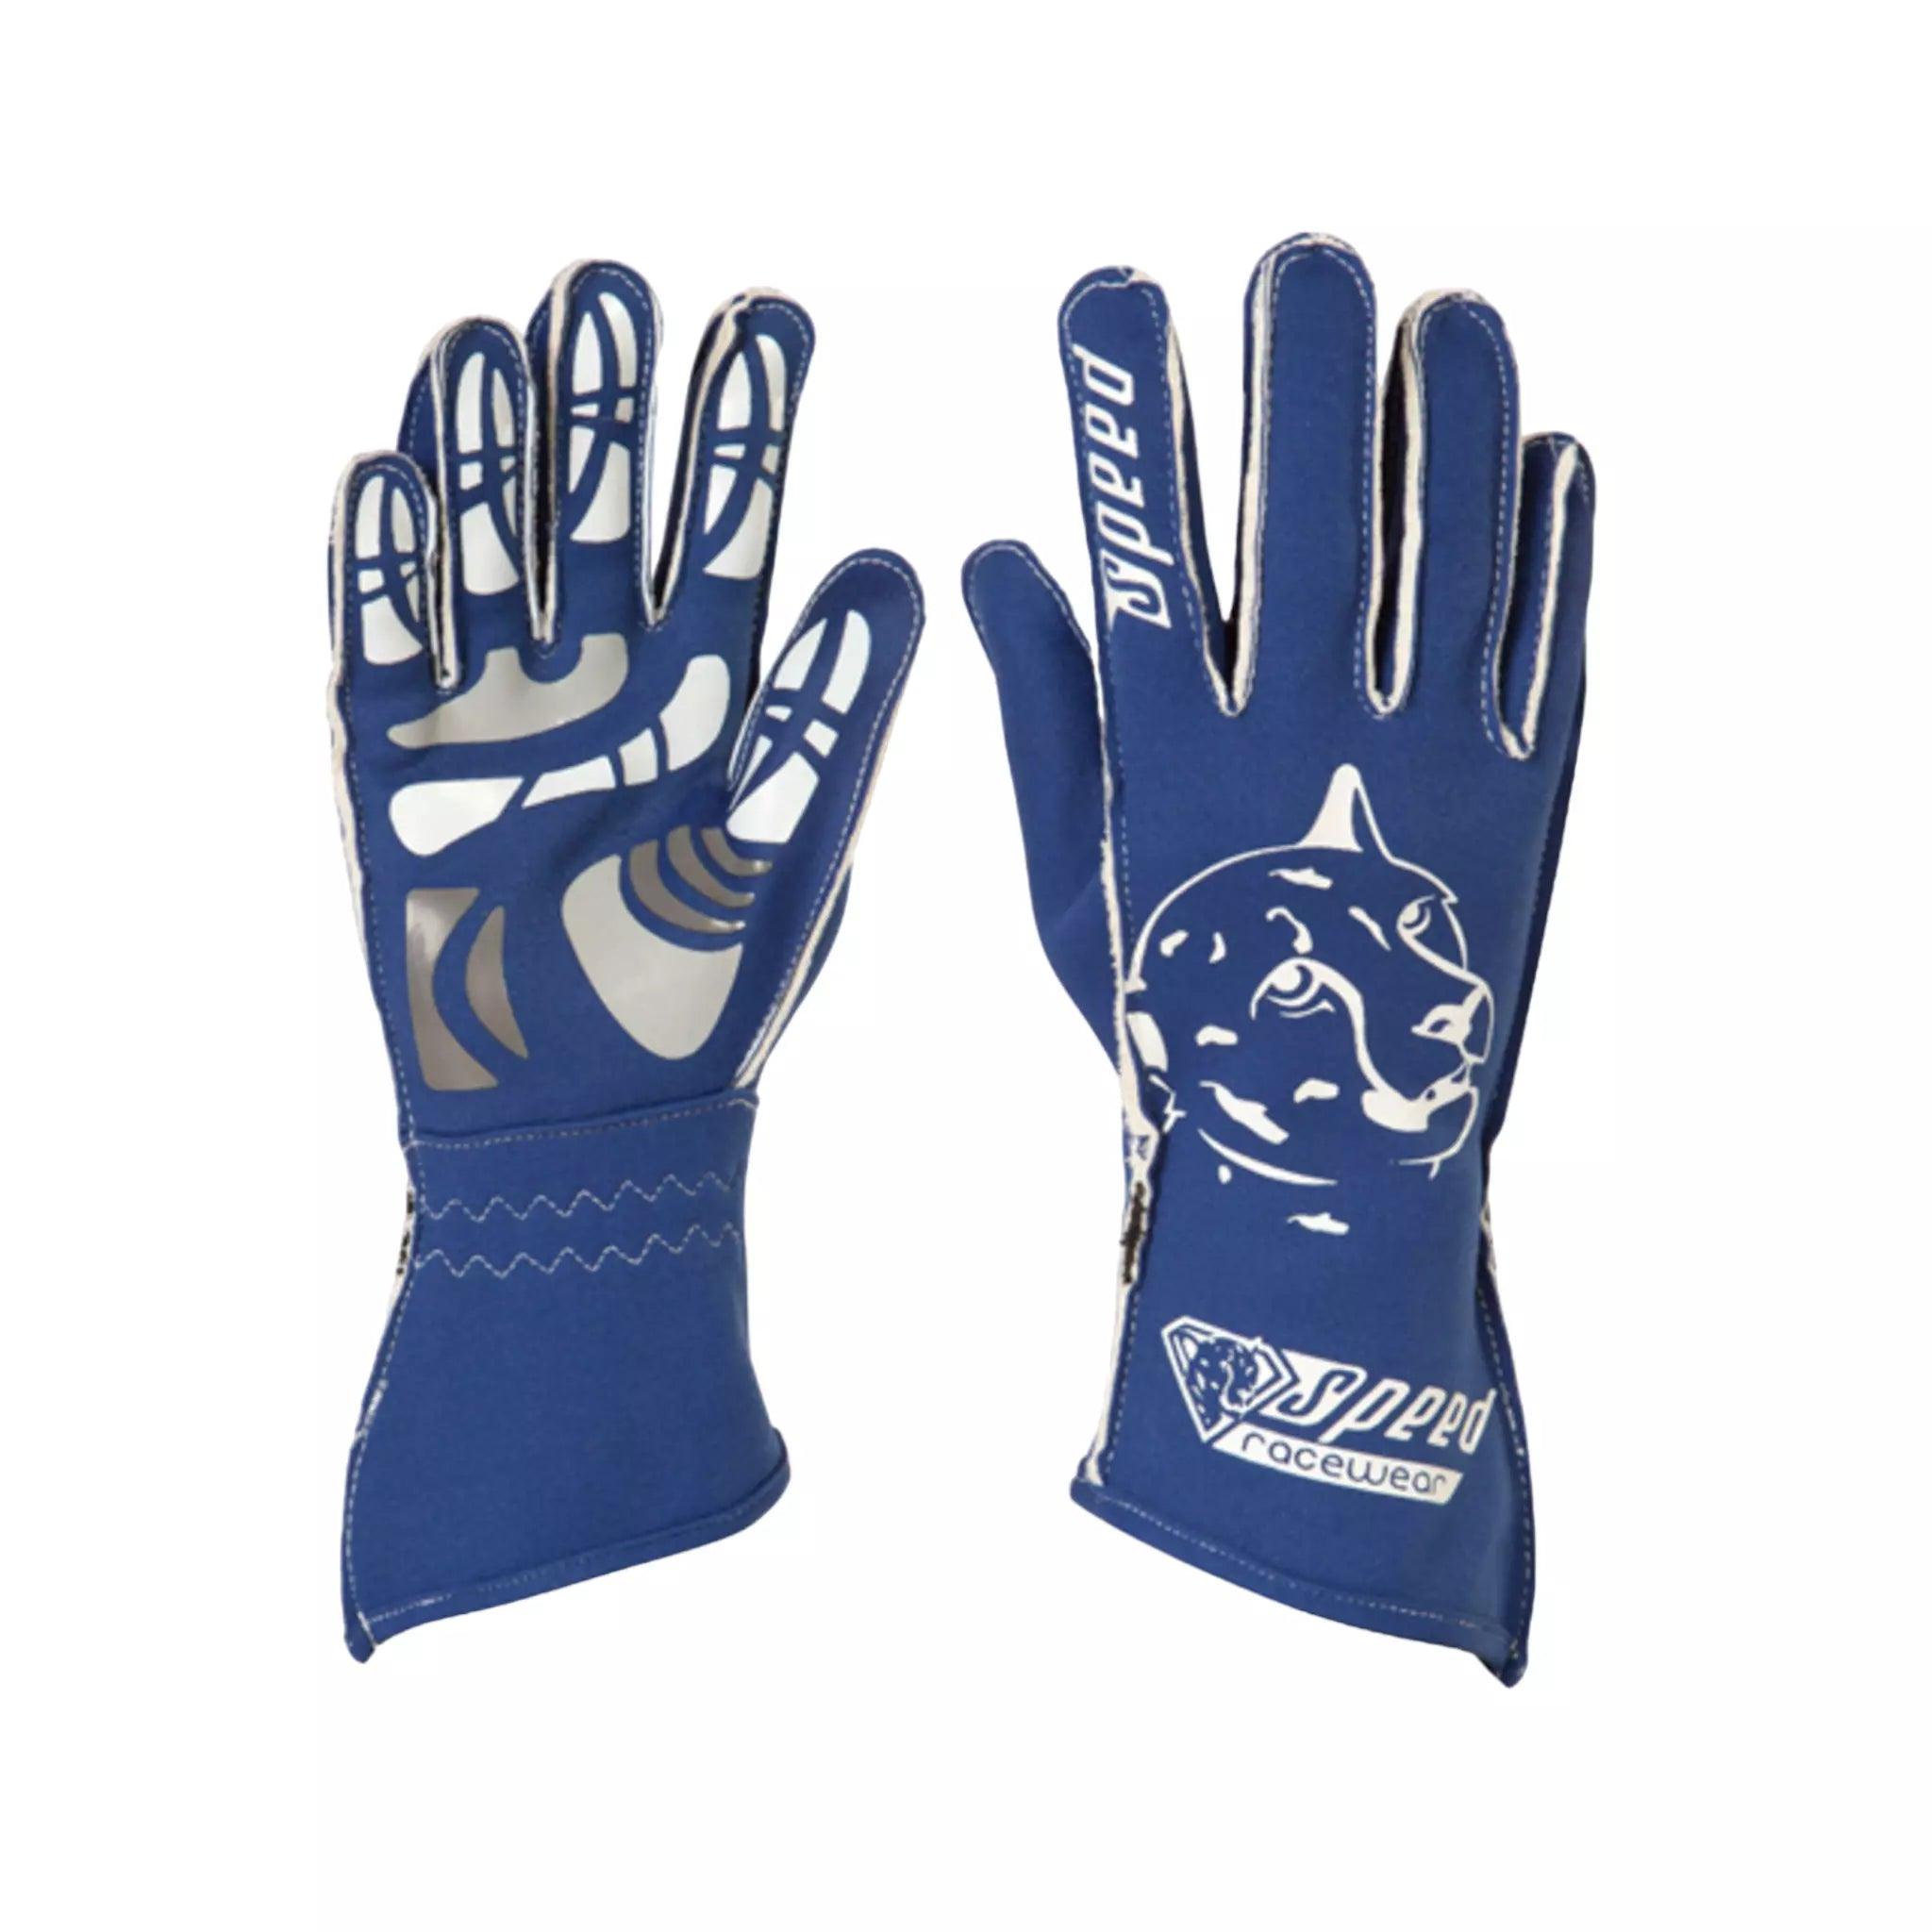 Speed gloves melbourne G-2 blue/ white DASH RACEGEAR